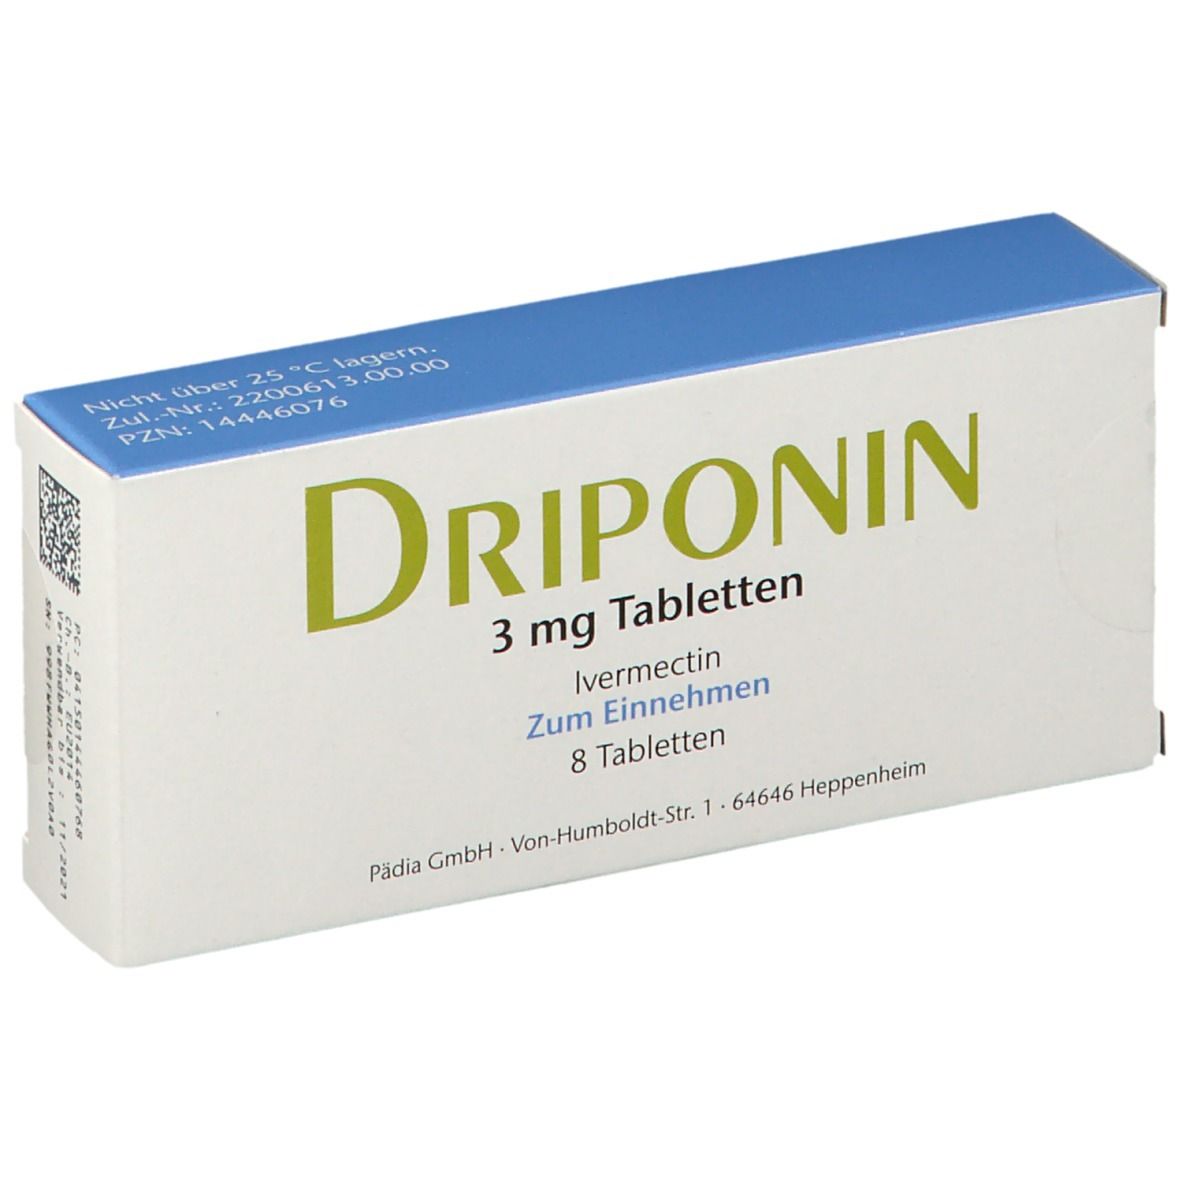 Driponin 3 mg